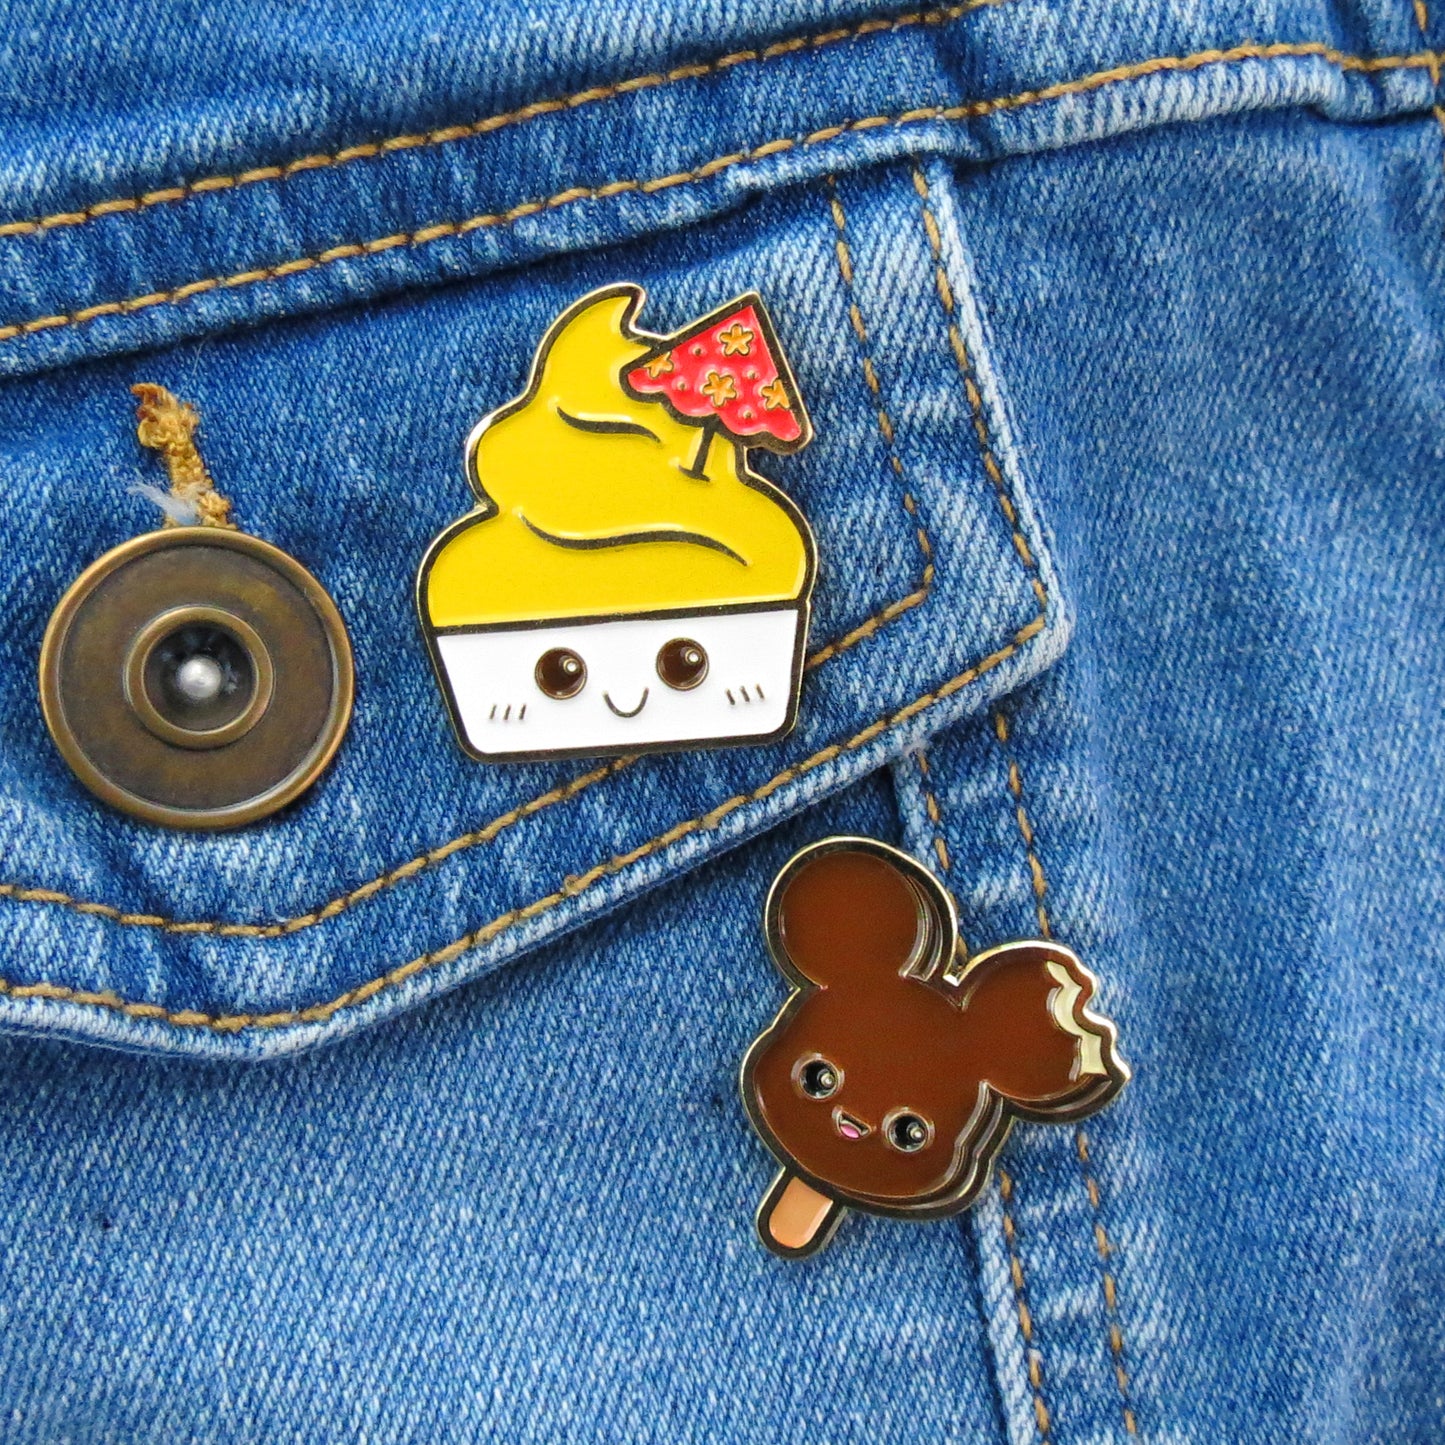 Disney Dole Whip and Mickey Ice Cream enamel pins on jean jacket pocket